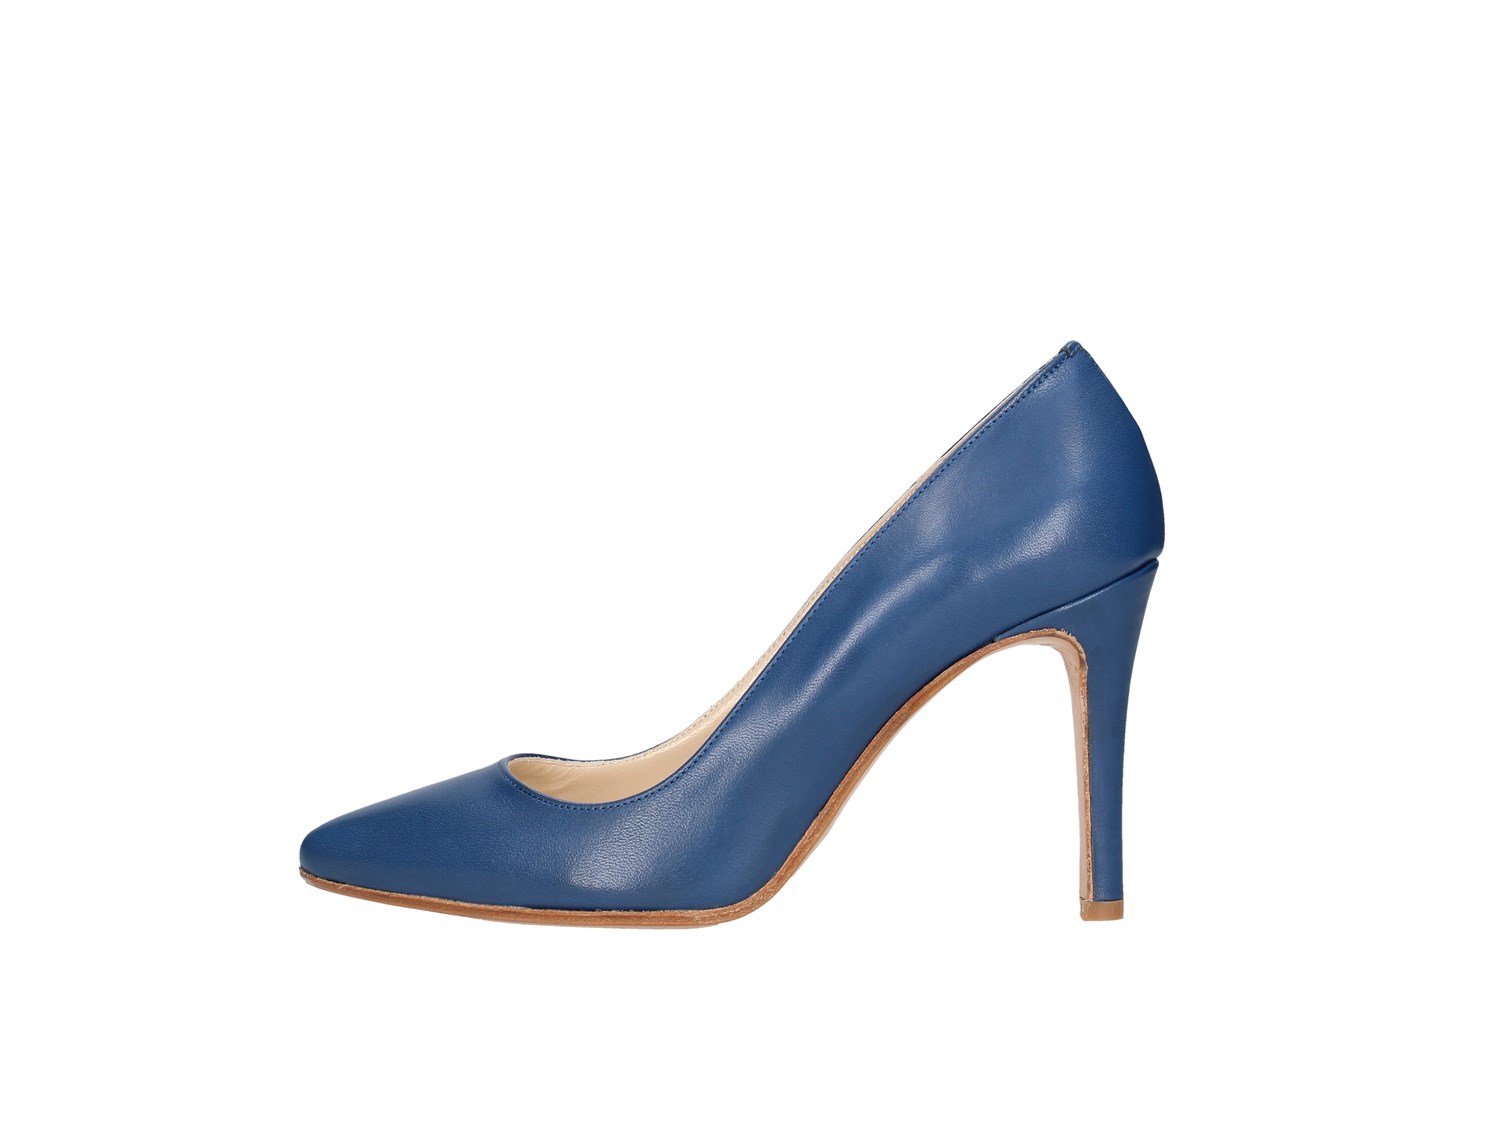 Martina 700 Bluette Shoes Women Heels'